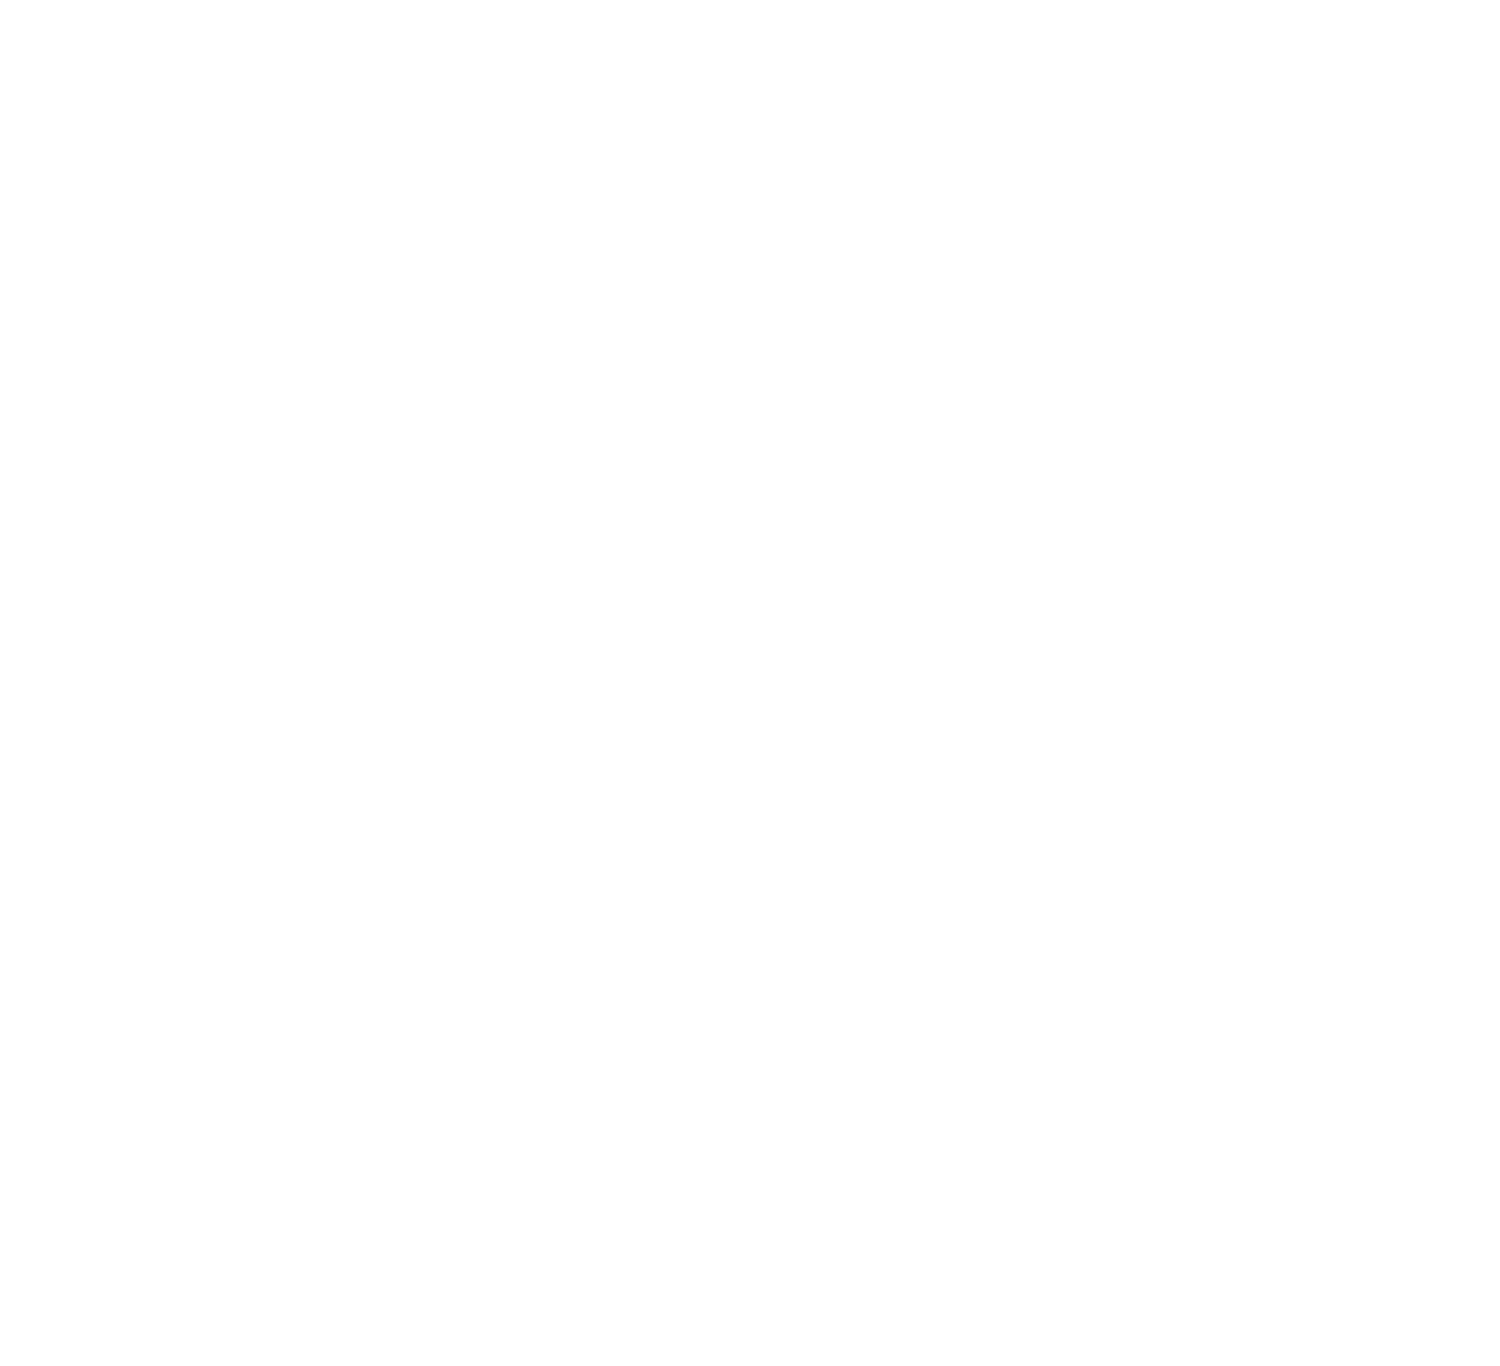 BAE Controls